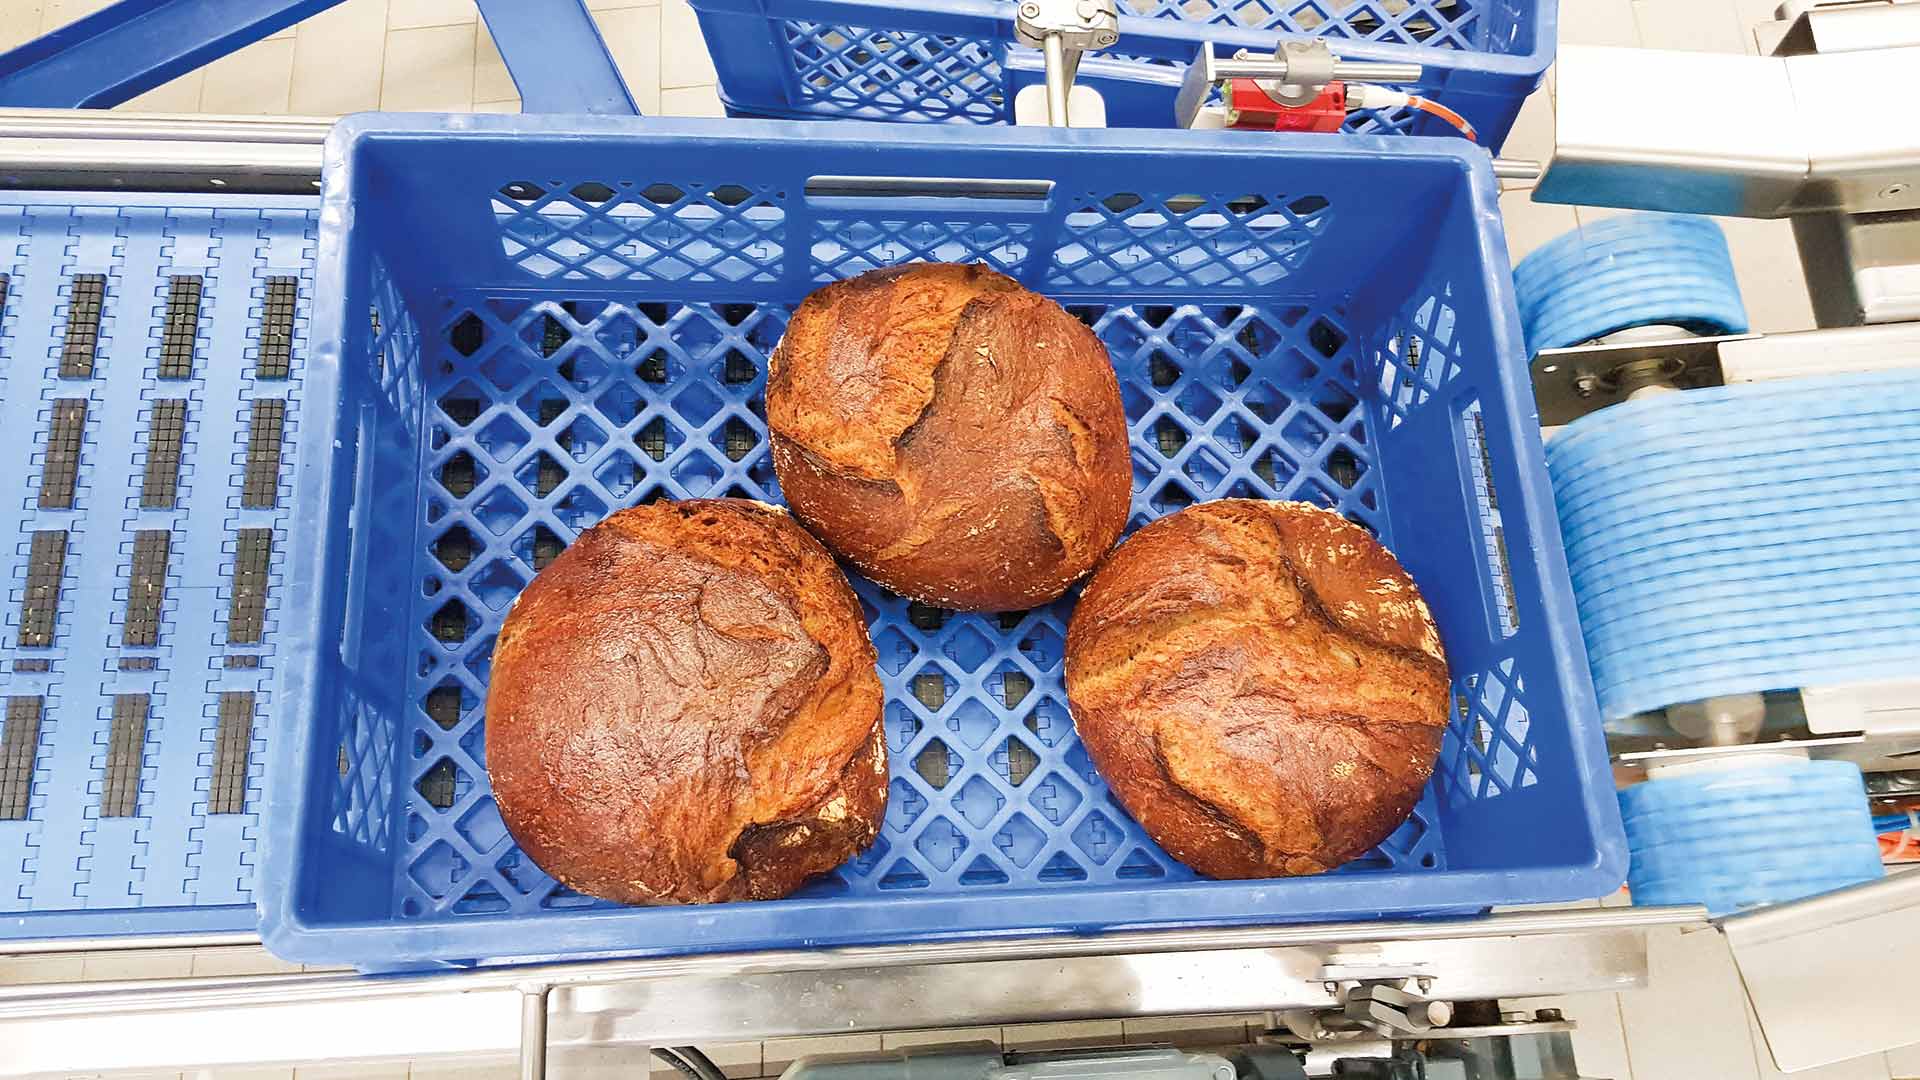 mfi-bakery-intralogistics-conveyor-bread-rolls